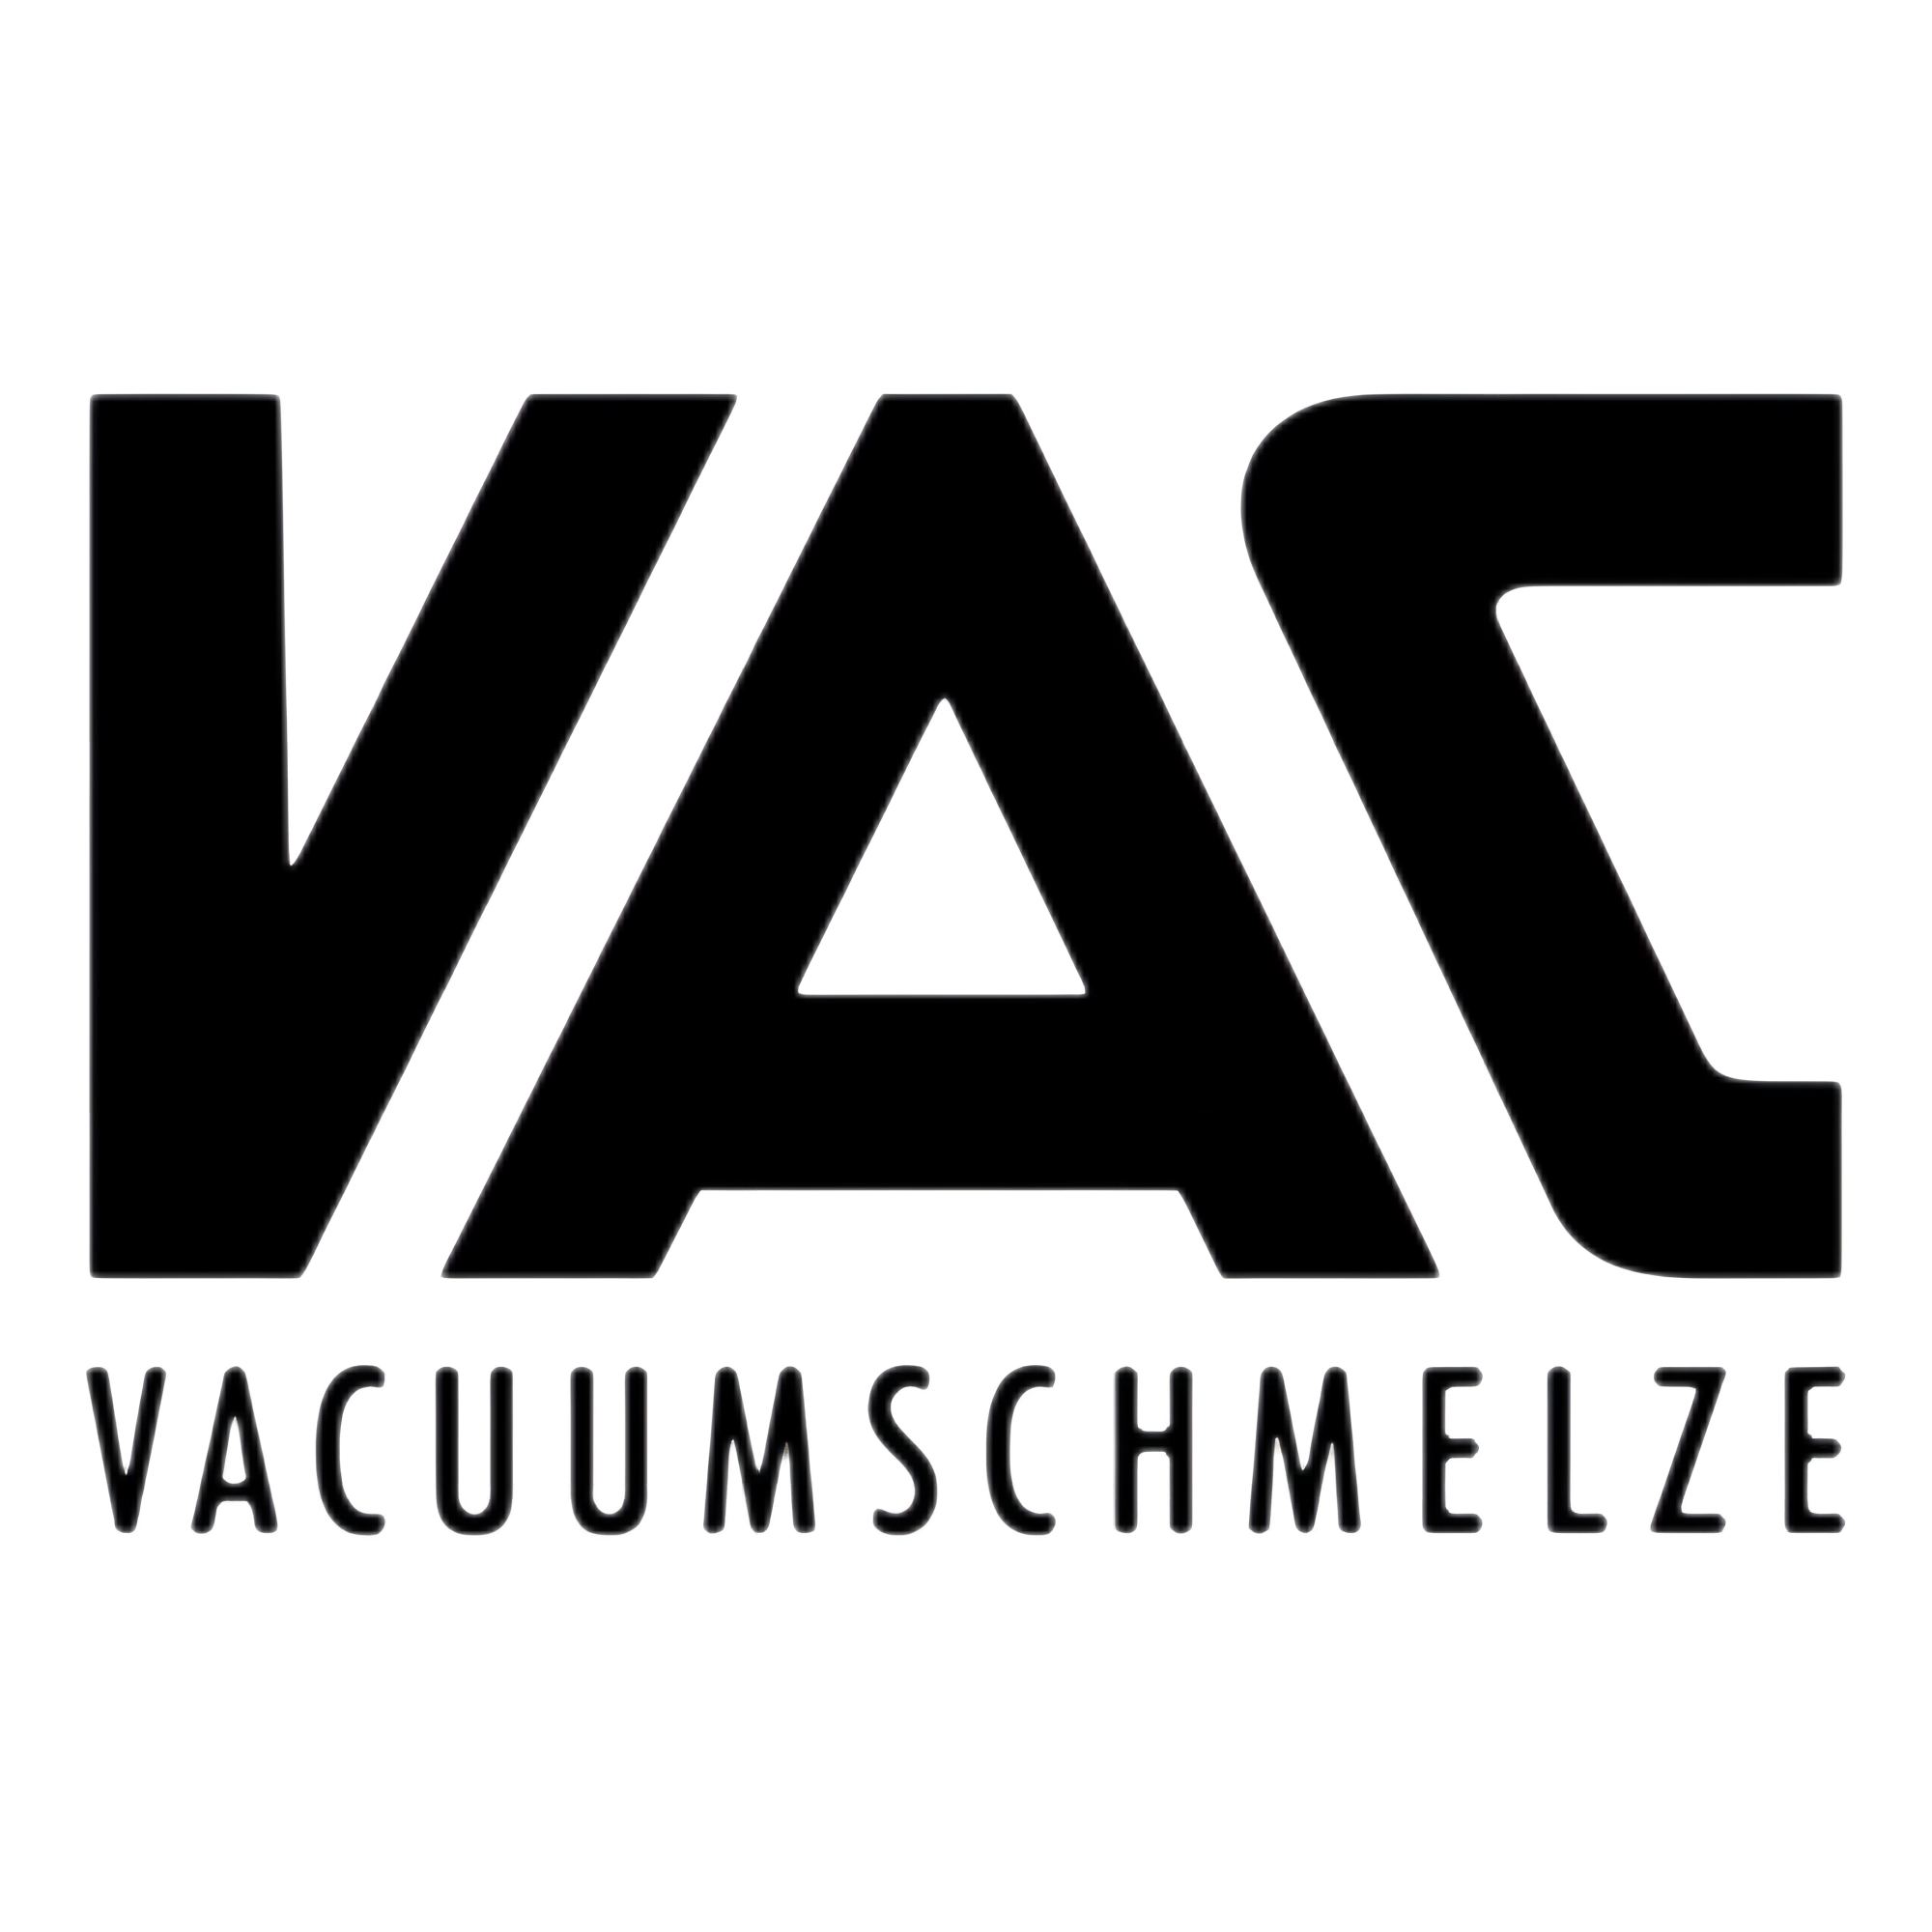 Vacuumschmelze image